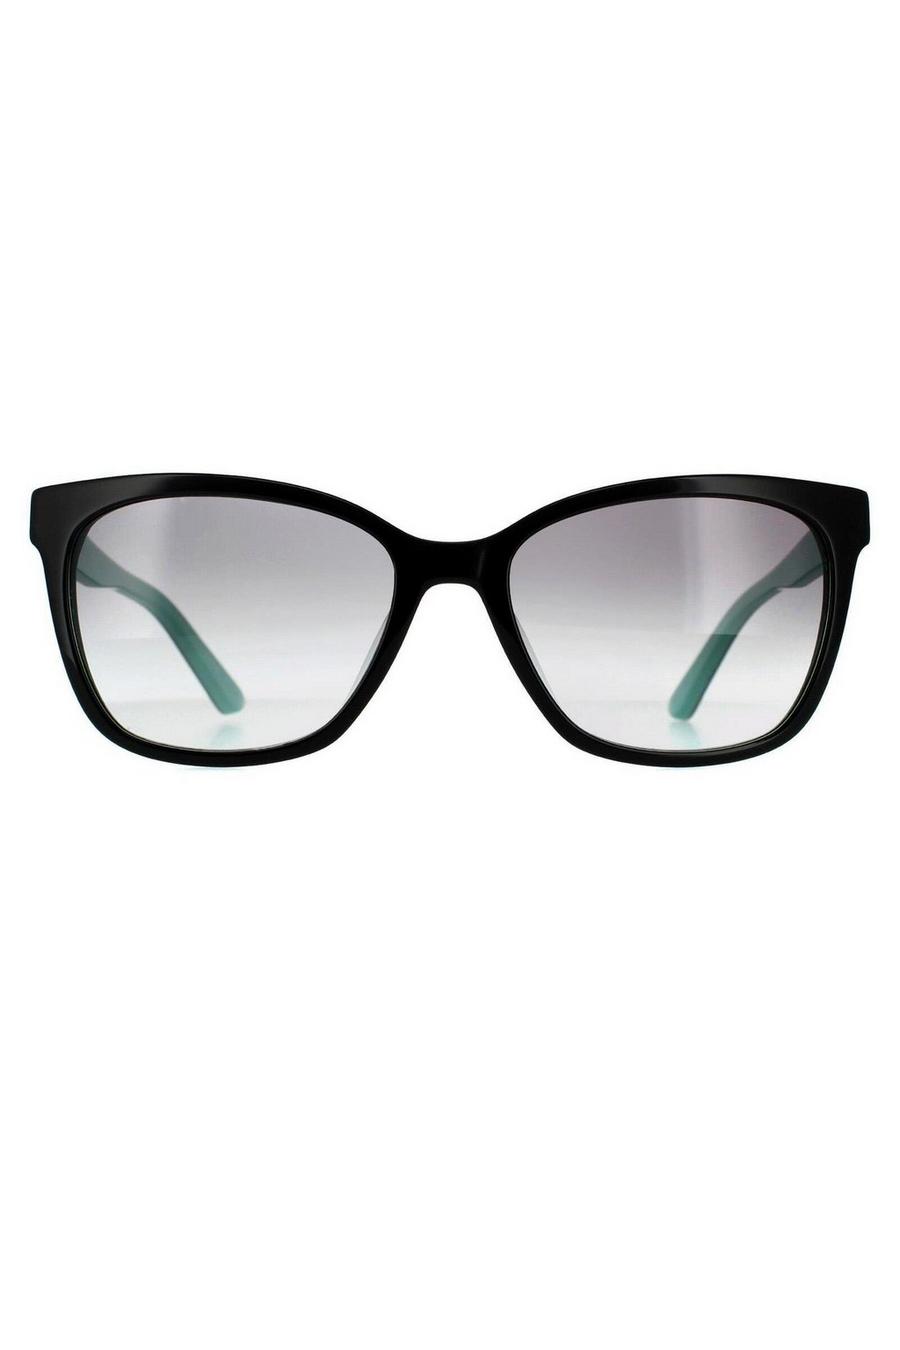 Rectangle Black Teal Grey Gradient Sunglasses